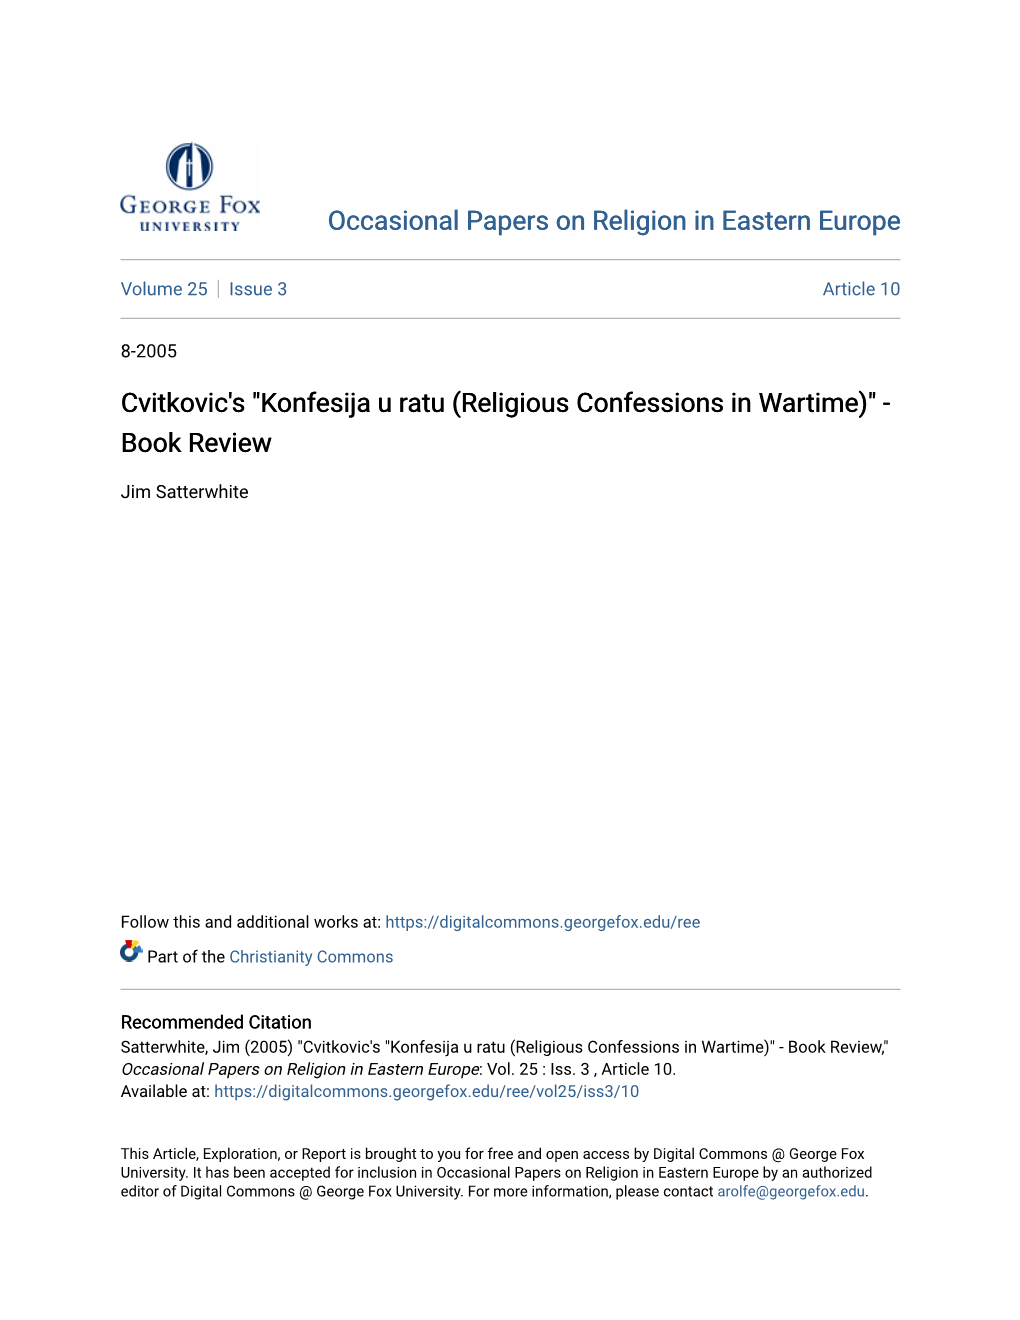 Cvitkovic's "Konfesija U Ratu (Religious Confessions in Wartime)" - Book Review